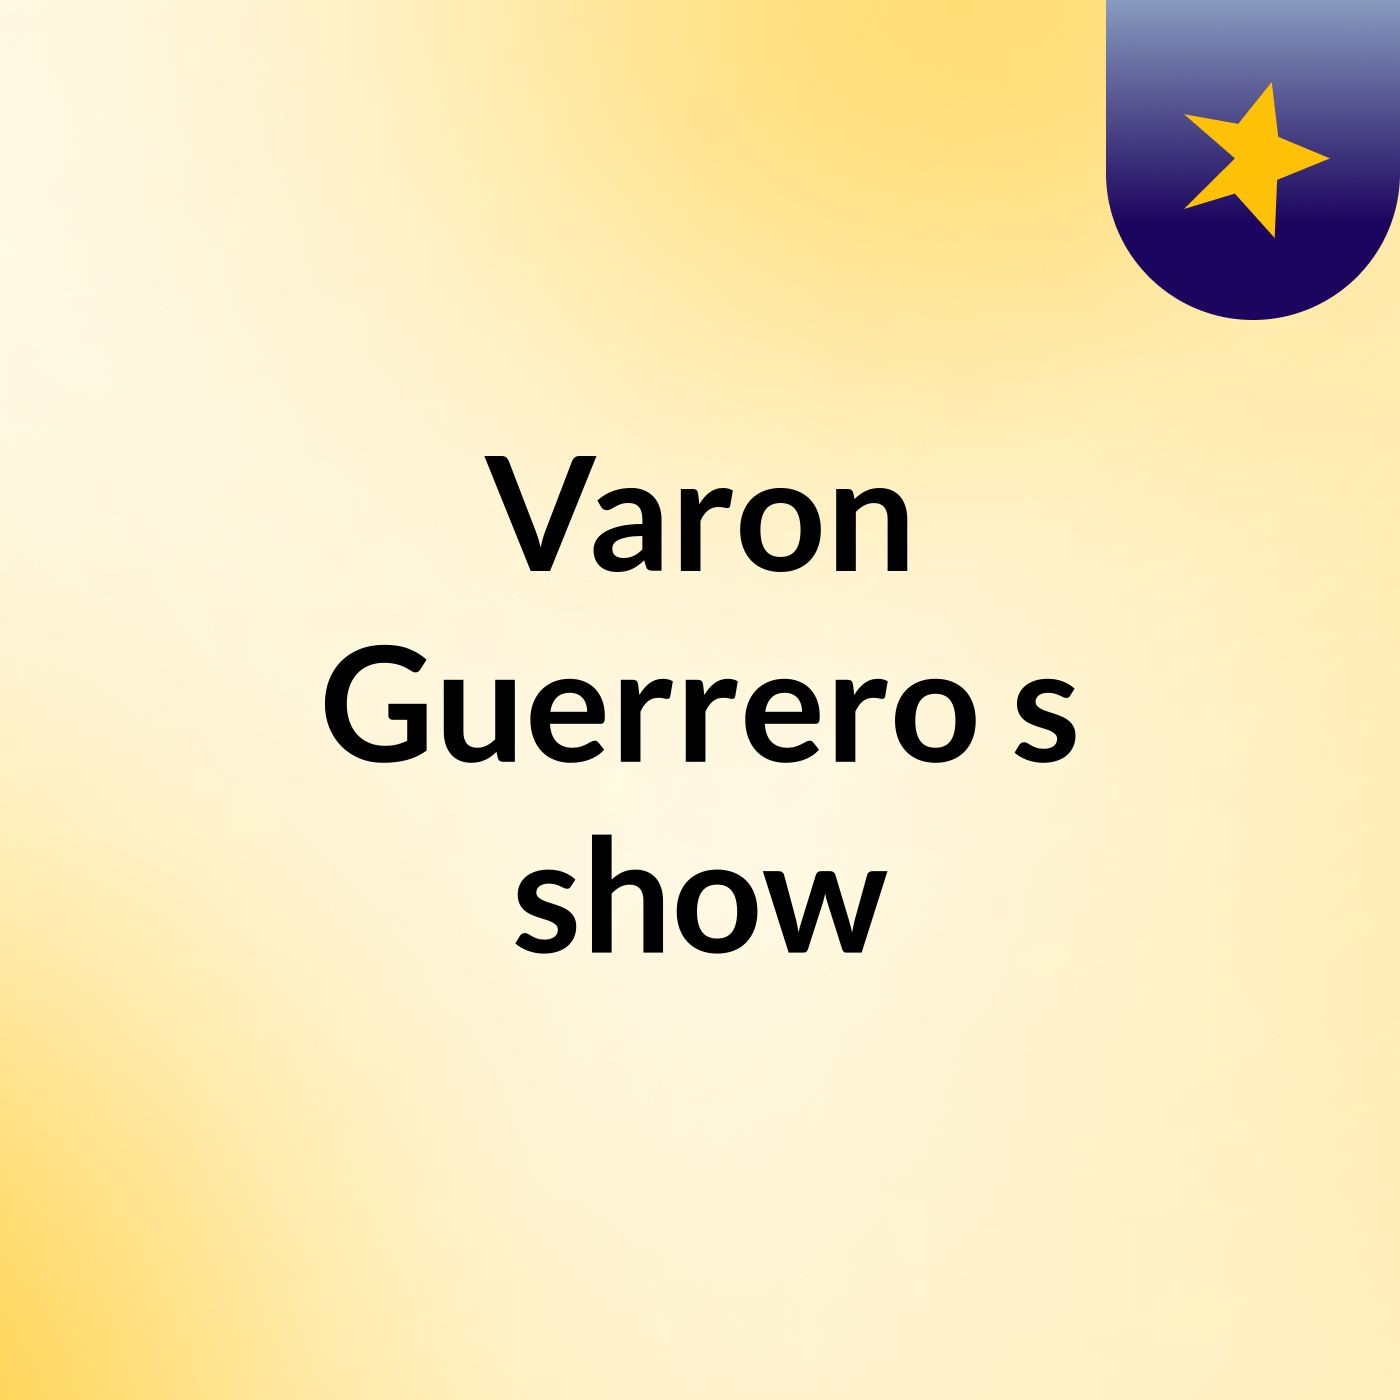 Varon Guerrero's show